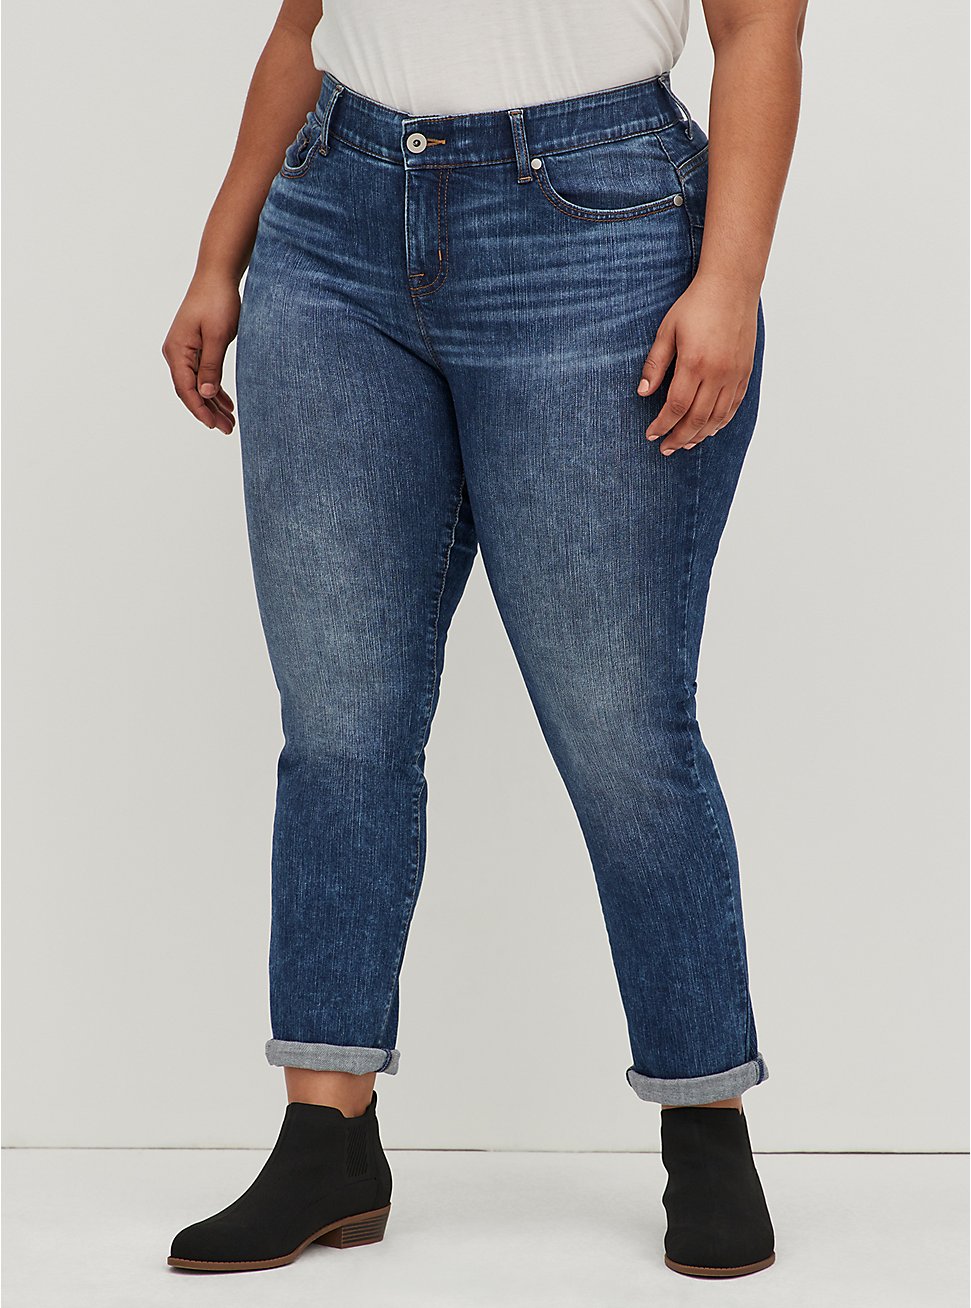 Plus Size - Bombshell Straight Jean - Premium Stretch Medium Wash - Torrid